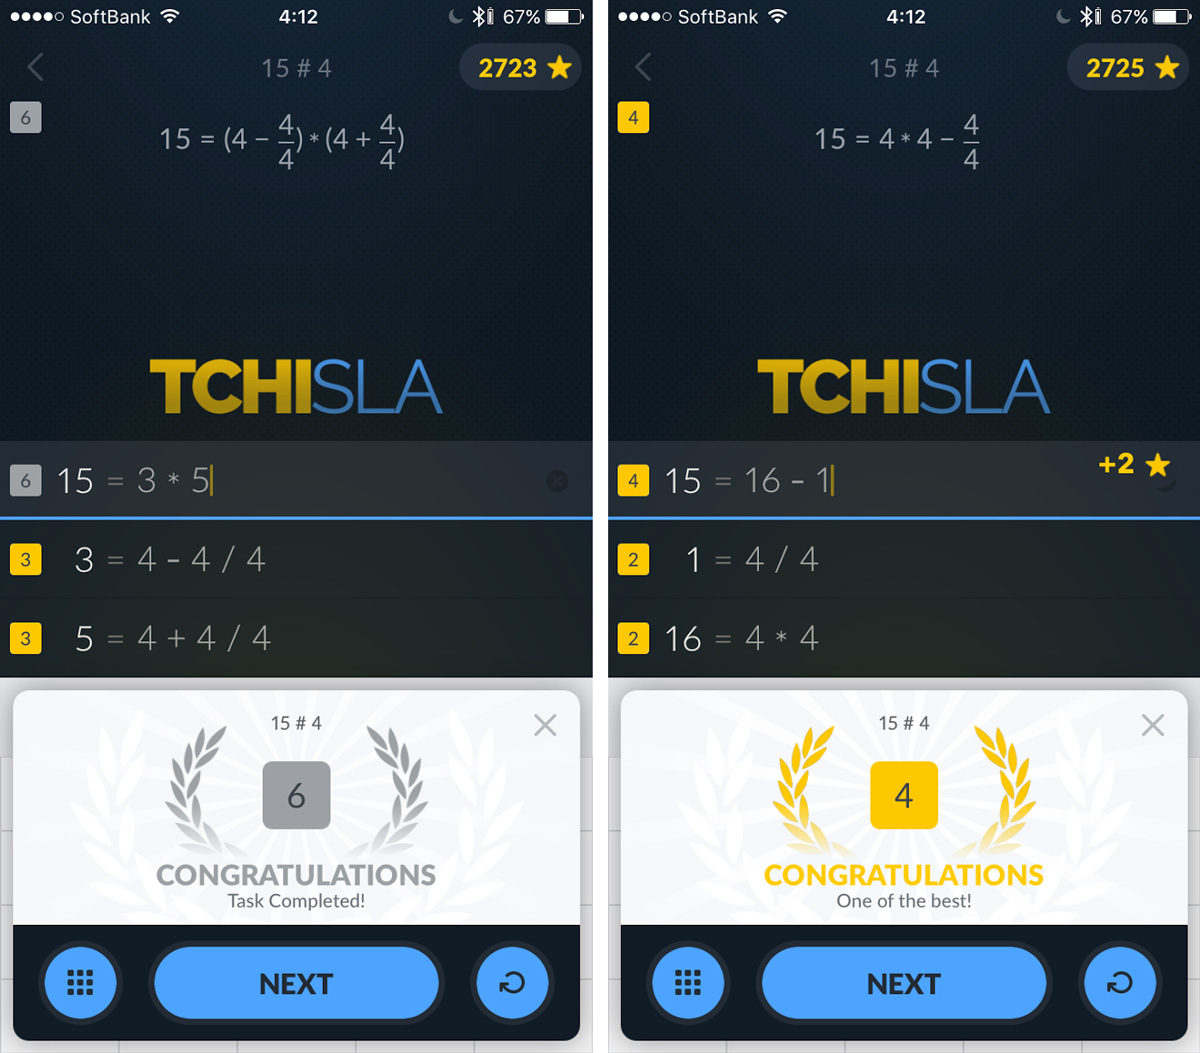 app_game_tchisla_5